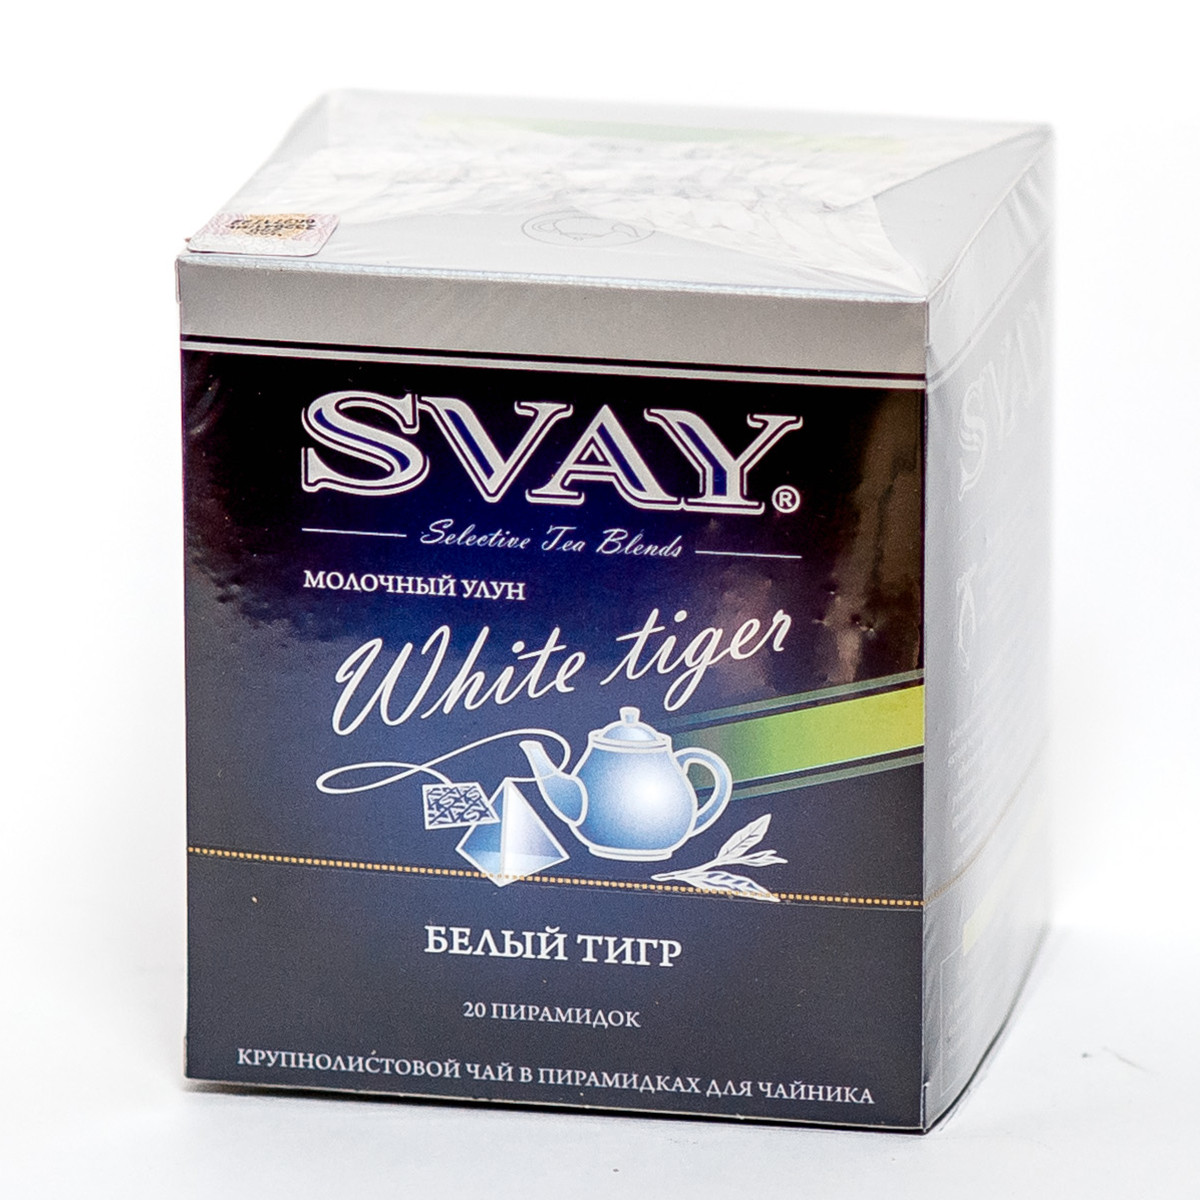 Чай "Svay White Tiger", ТМ "SVAY" чай зеленый Улун, "Молоко" (пакетированный пирамидки 20х4 гр)